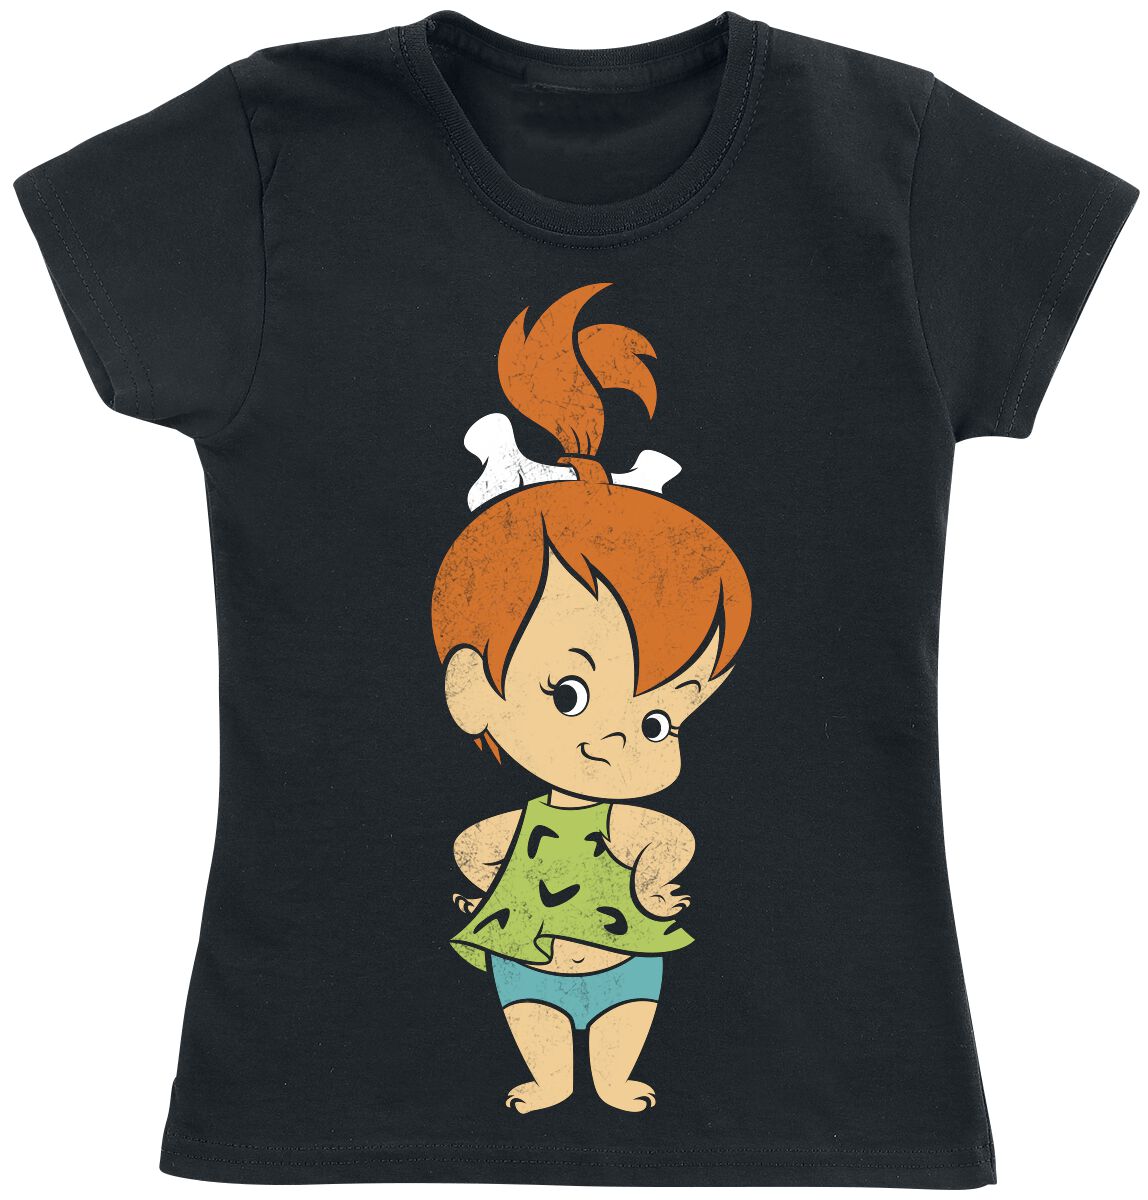 The Flintstones Angry Pebbles T-Shirt black